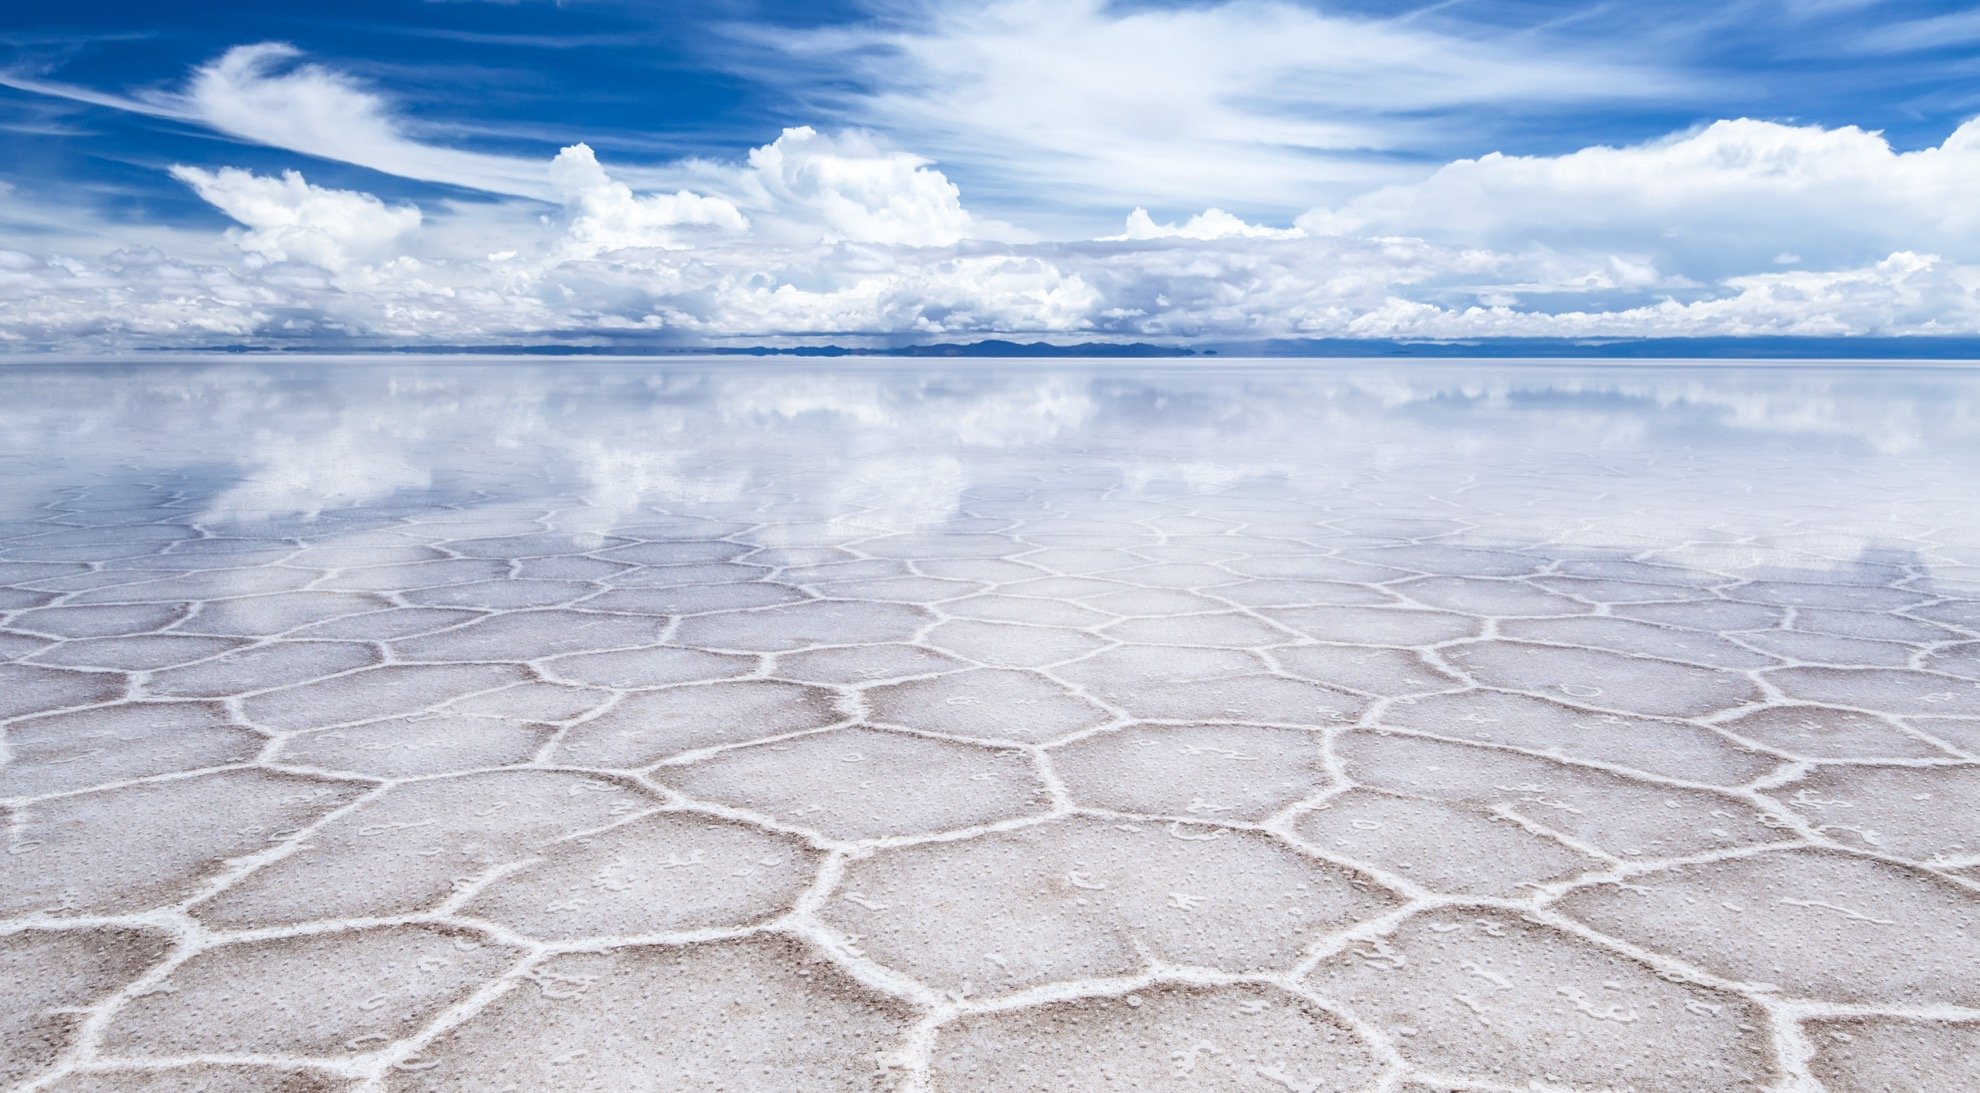 How To Visit The Salt Flat Of Salar De Uyuni